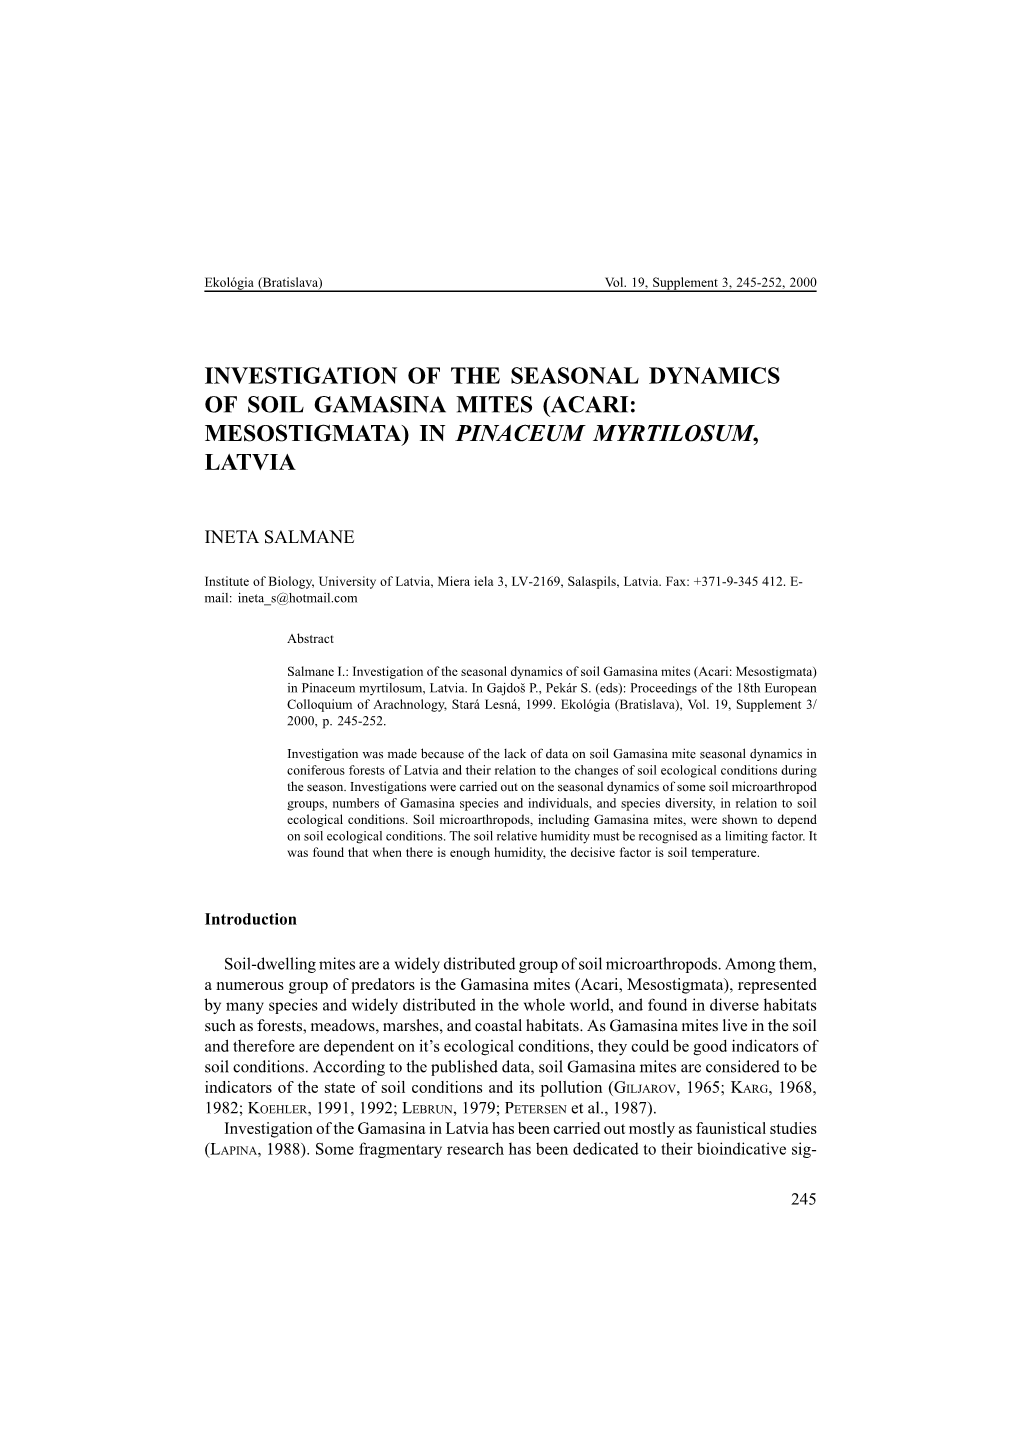 Investigation of the Seasonal Dynamics of Soil Gamasina Mites (Acari: Mesostigmata) in Pinaceum Myrtilosum, Latvia